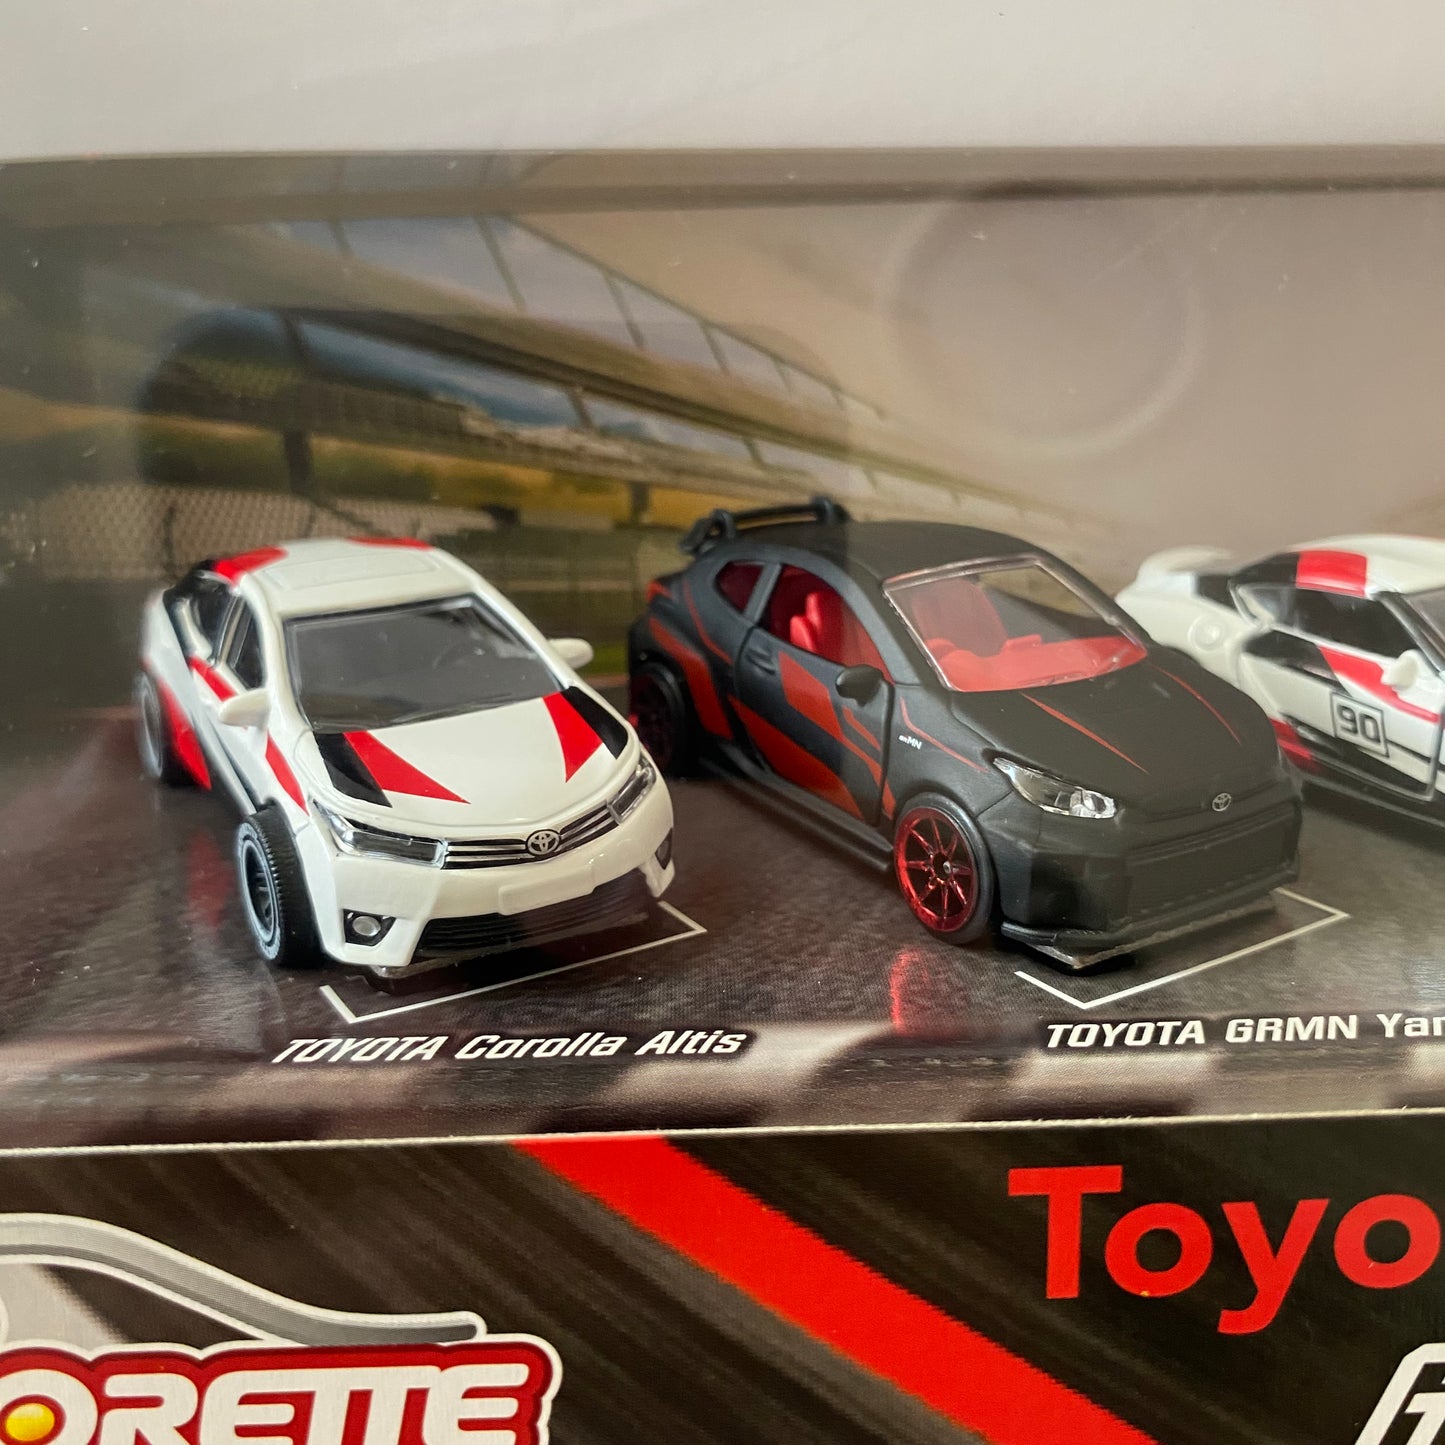 MAJORETTE Toyota Racing Gift Set (Corolla, Yaris, Supra, Hilux & 2000GT) BC09